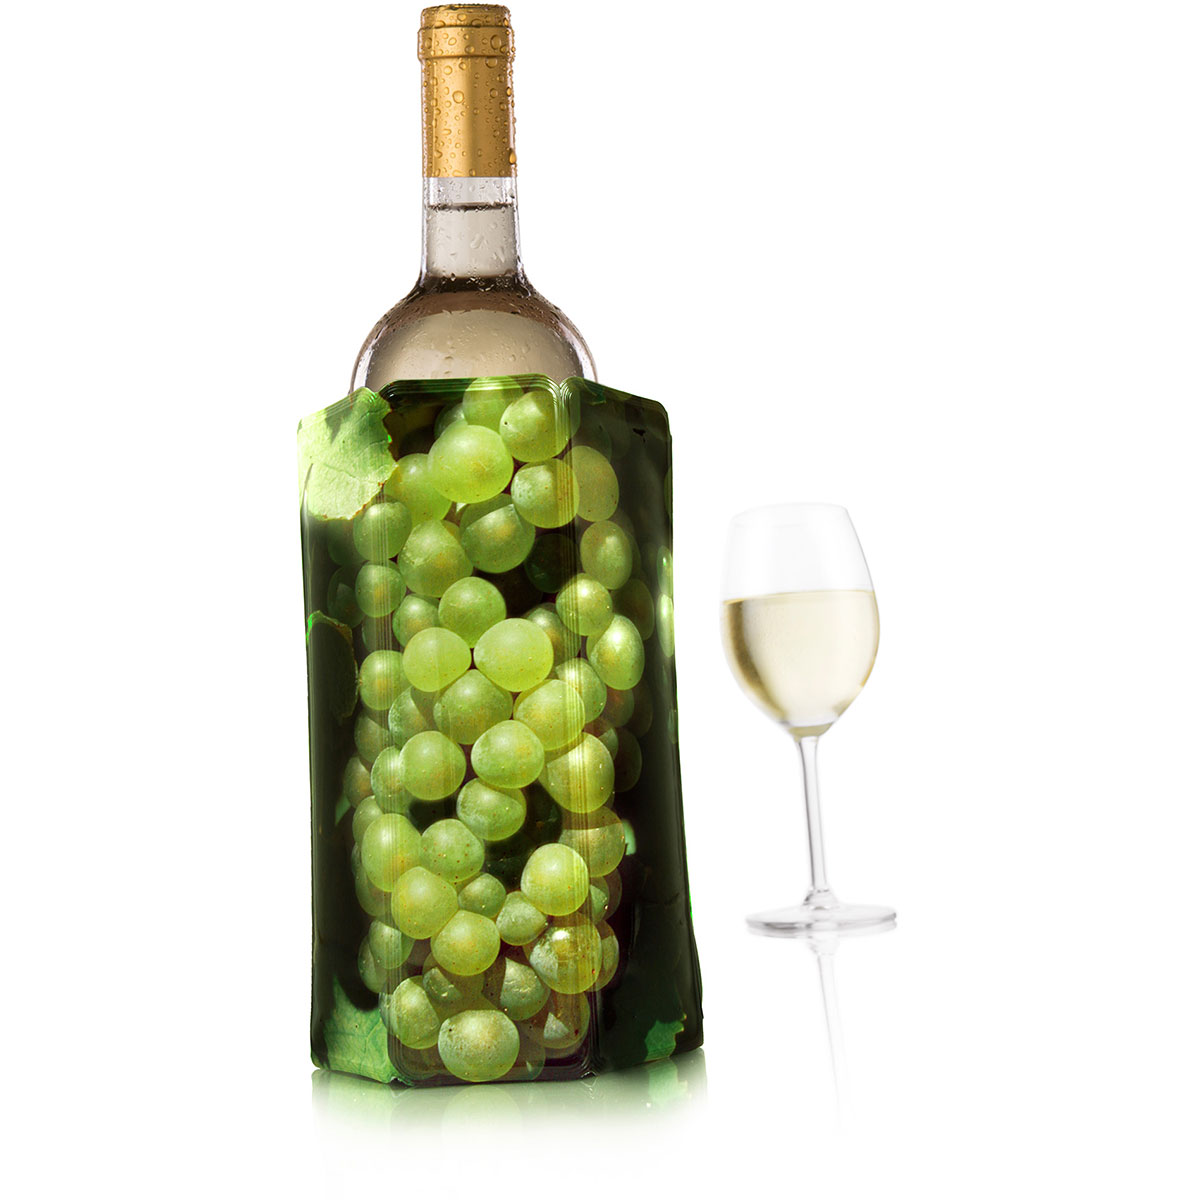 Vacu Vin Aktiv Weinkühler Motiv Grüne Traube 0,75 -1,0 Liter